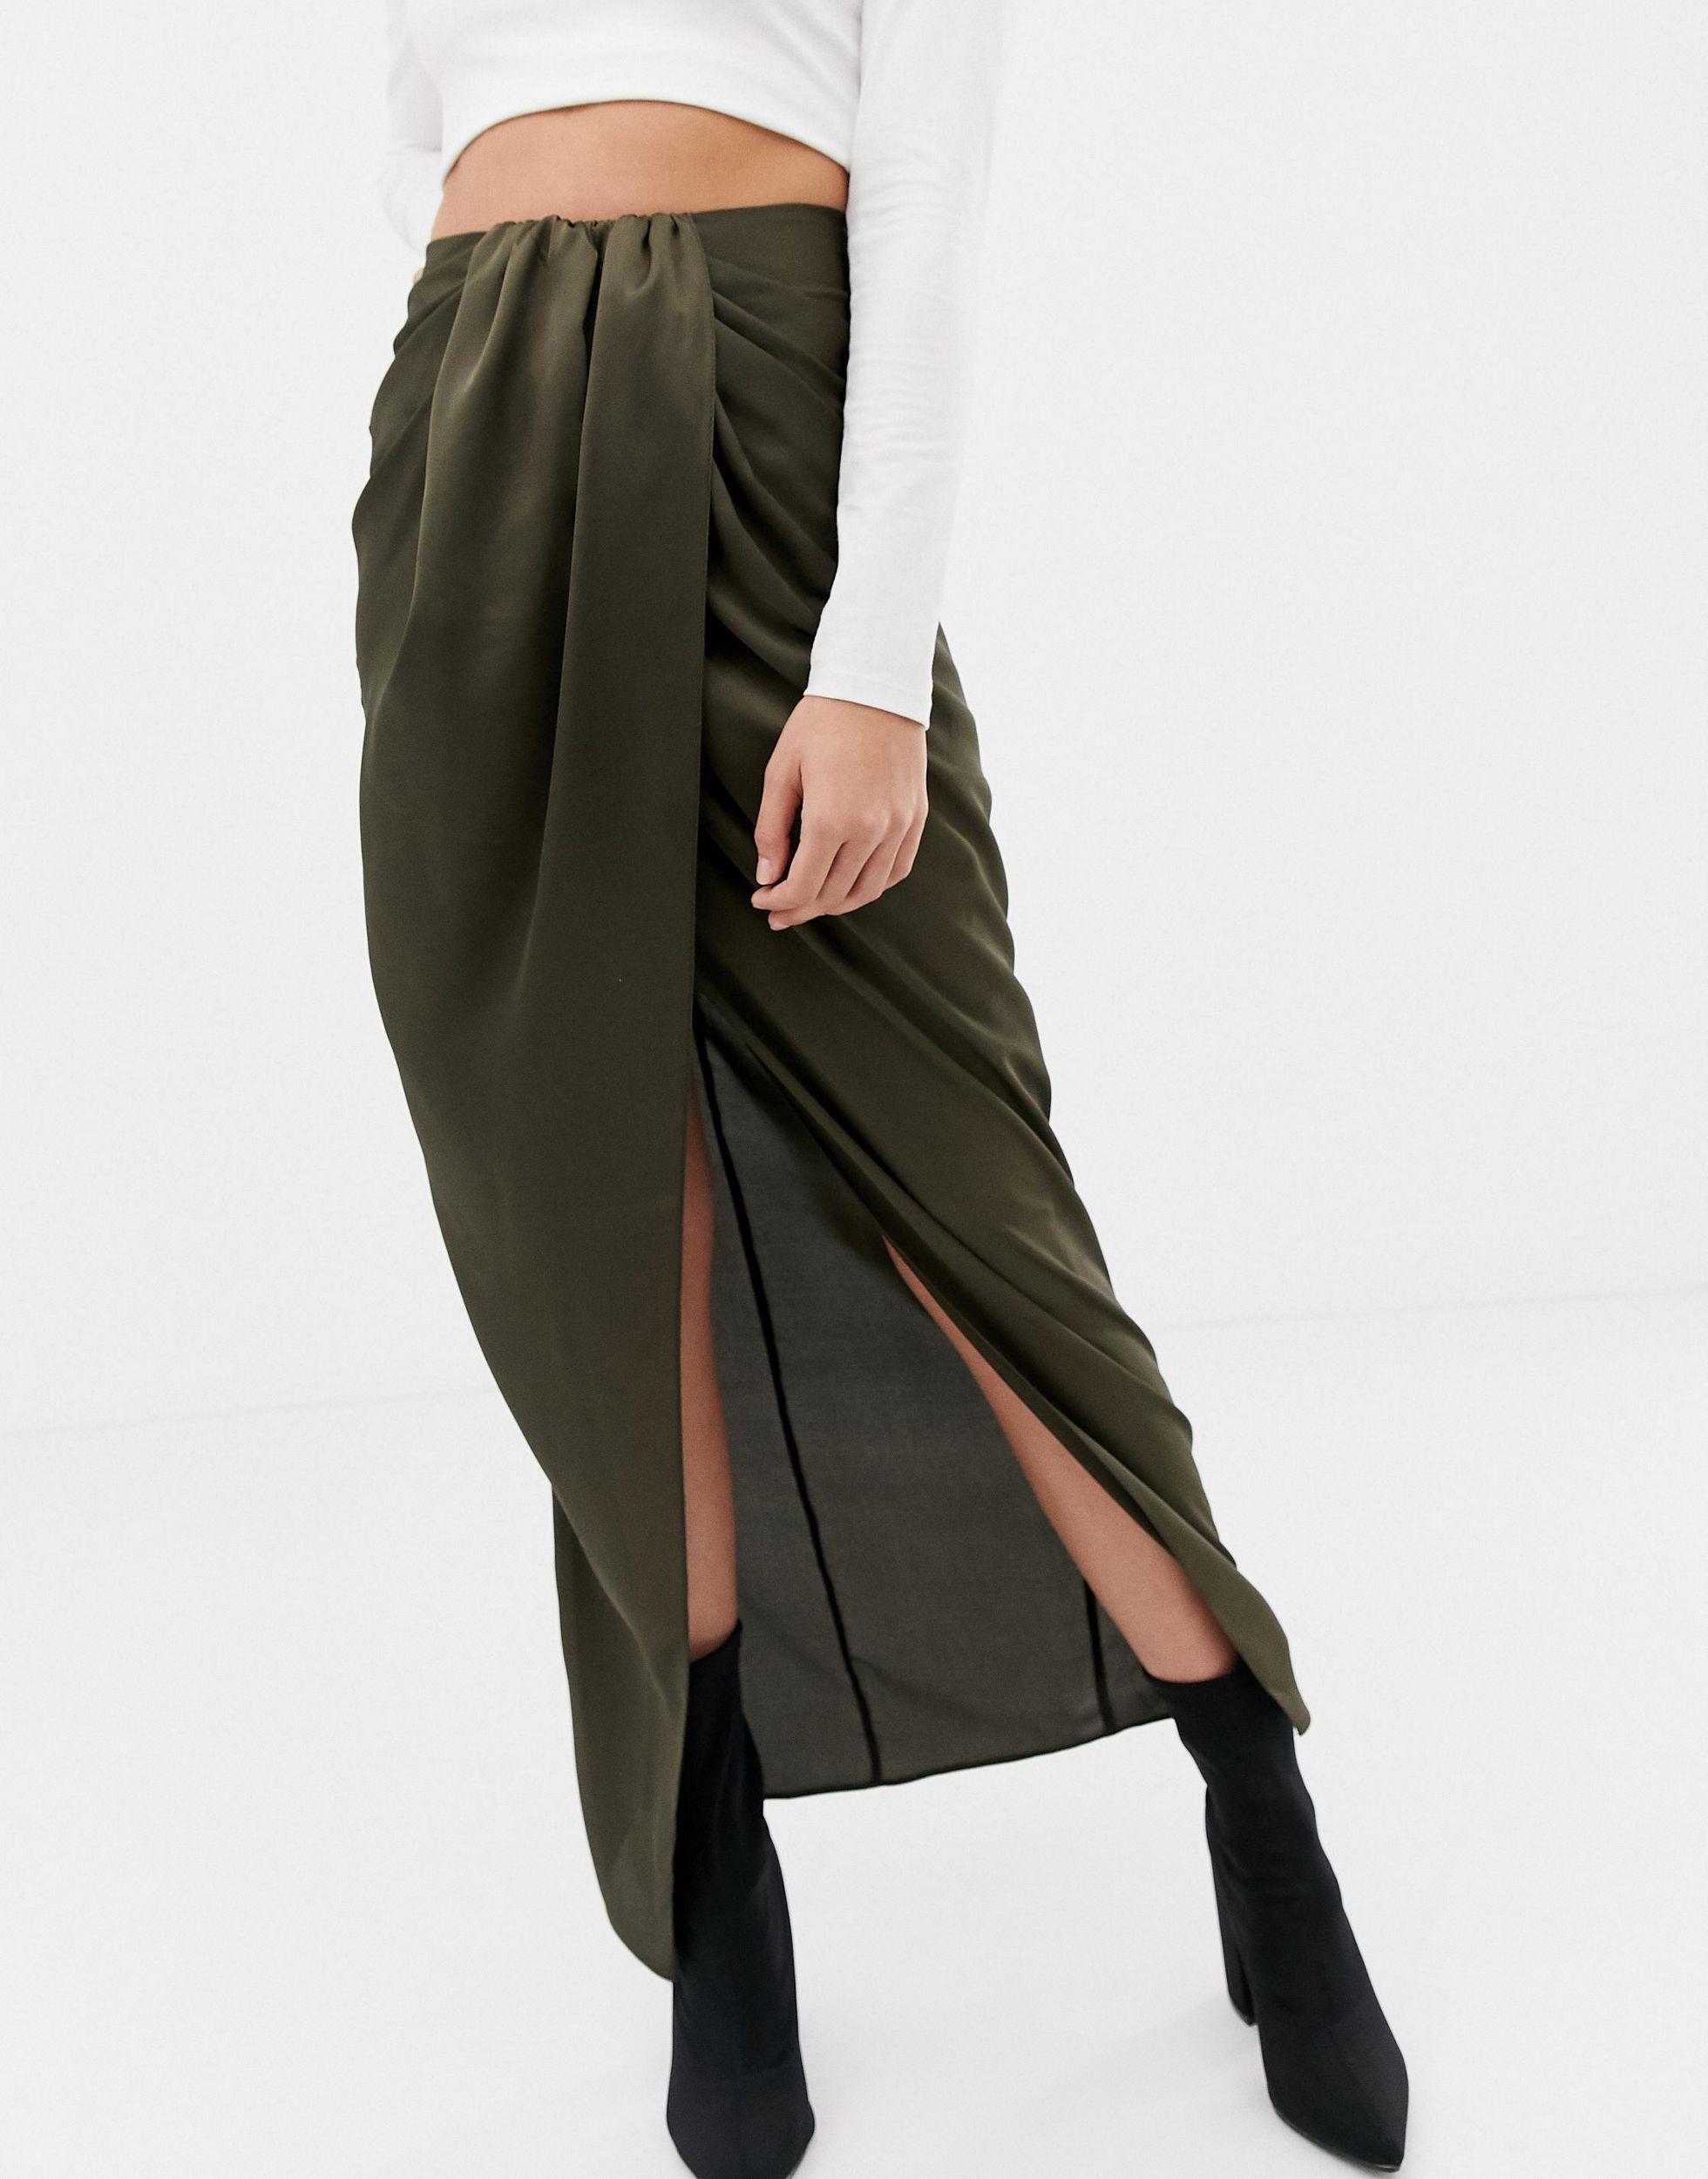 ASOS Satin Twist Front Maxi Skirt in Green - Lyst